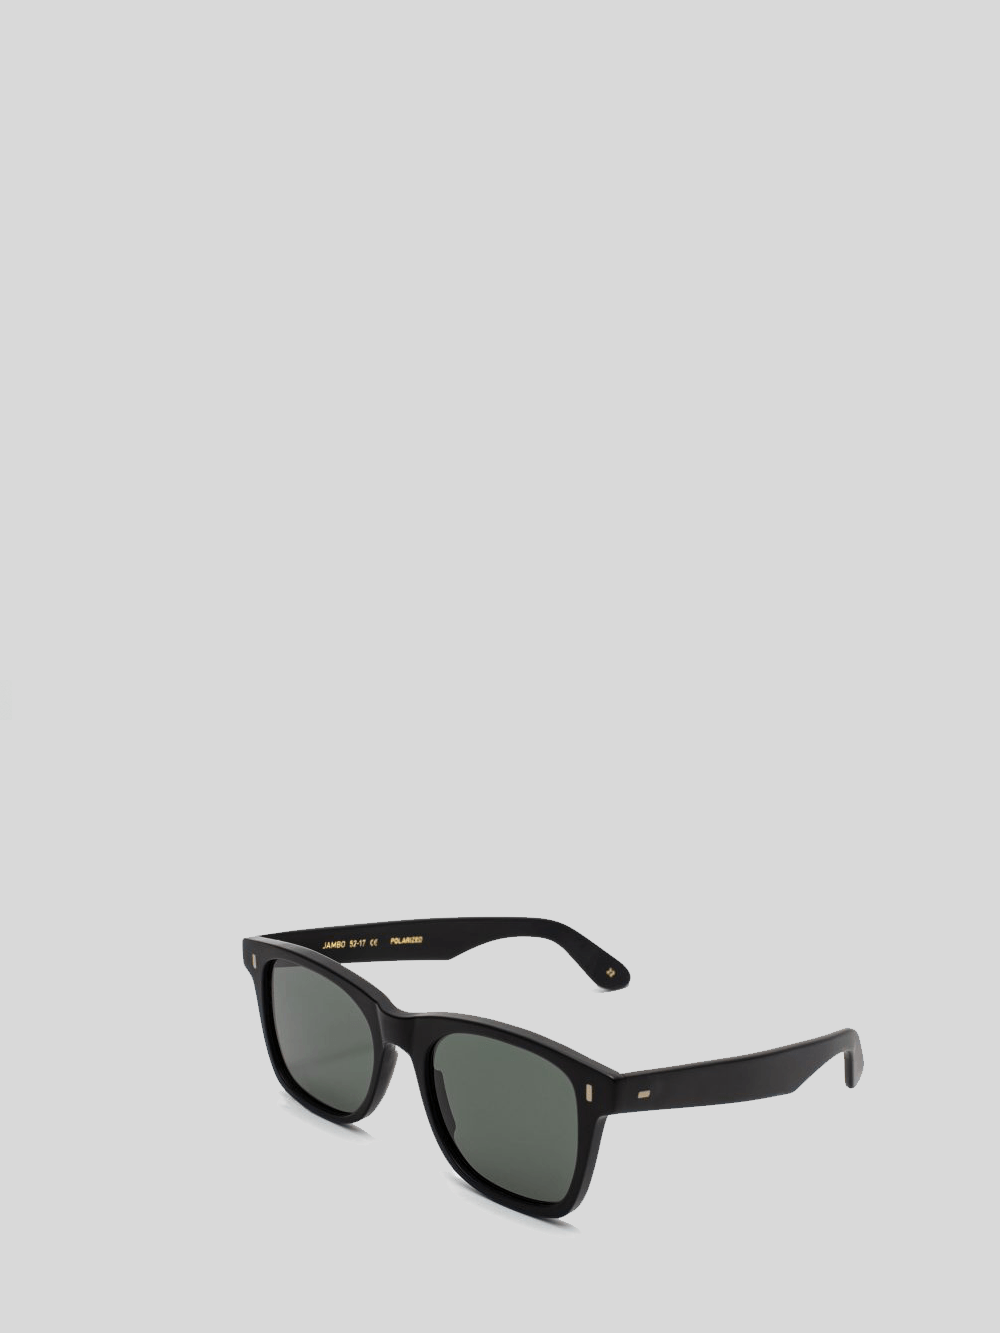 Jambo Black Matt 22 Grey Polarized 52' Sunglasses L.G.R. 